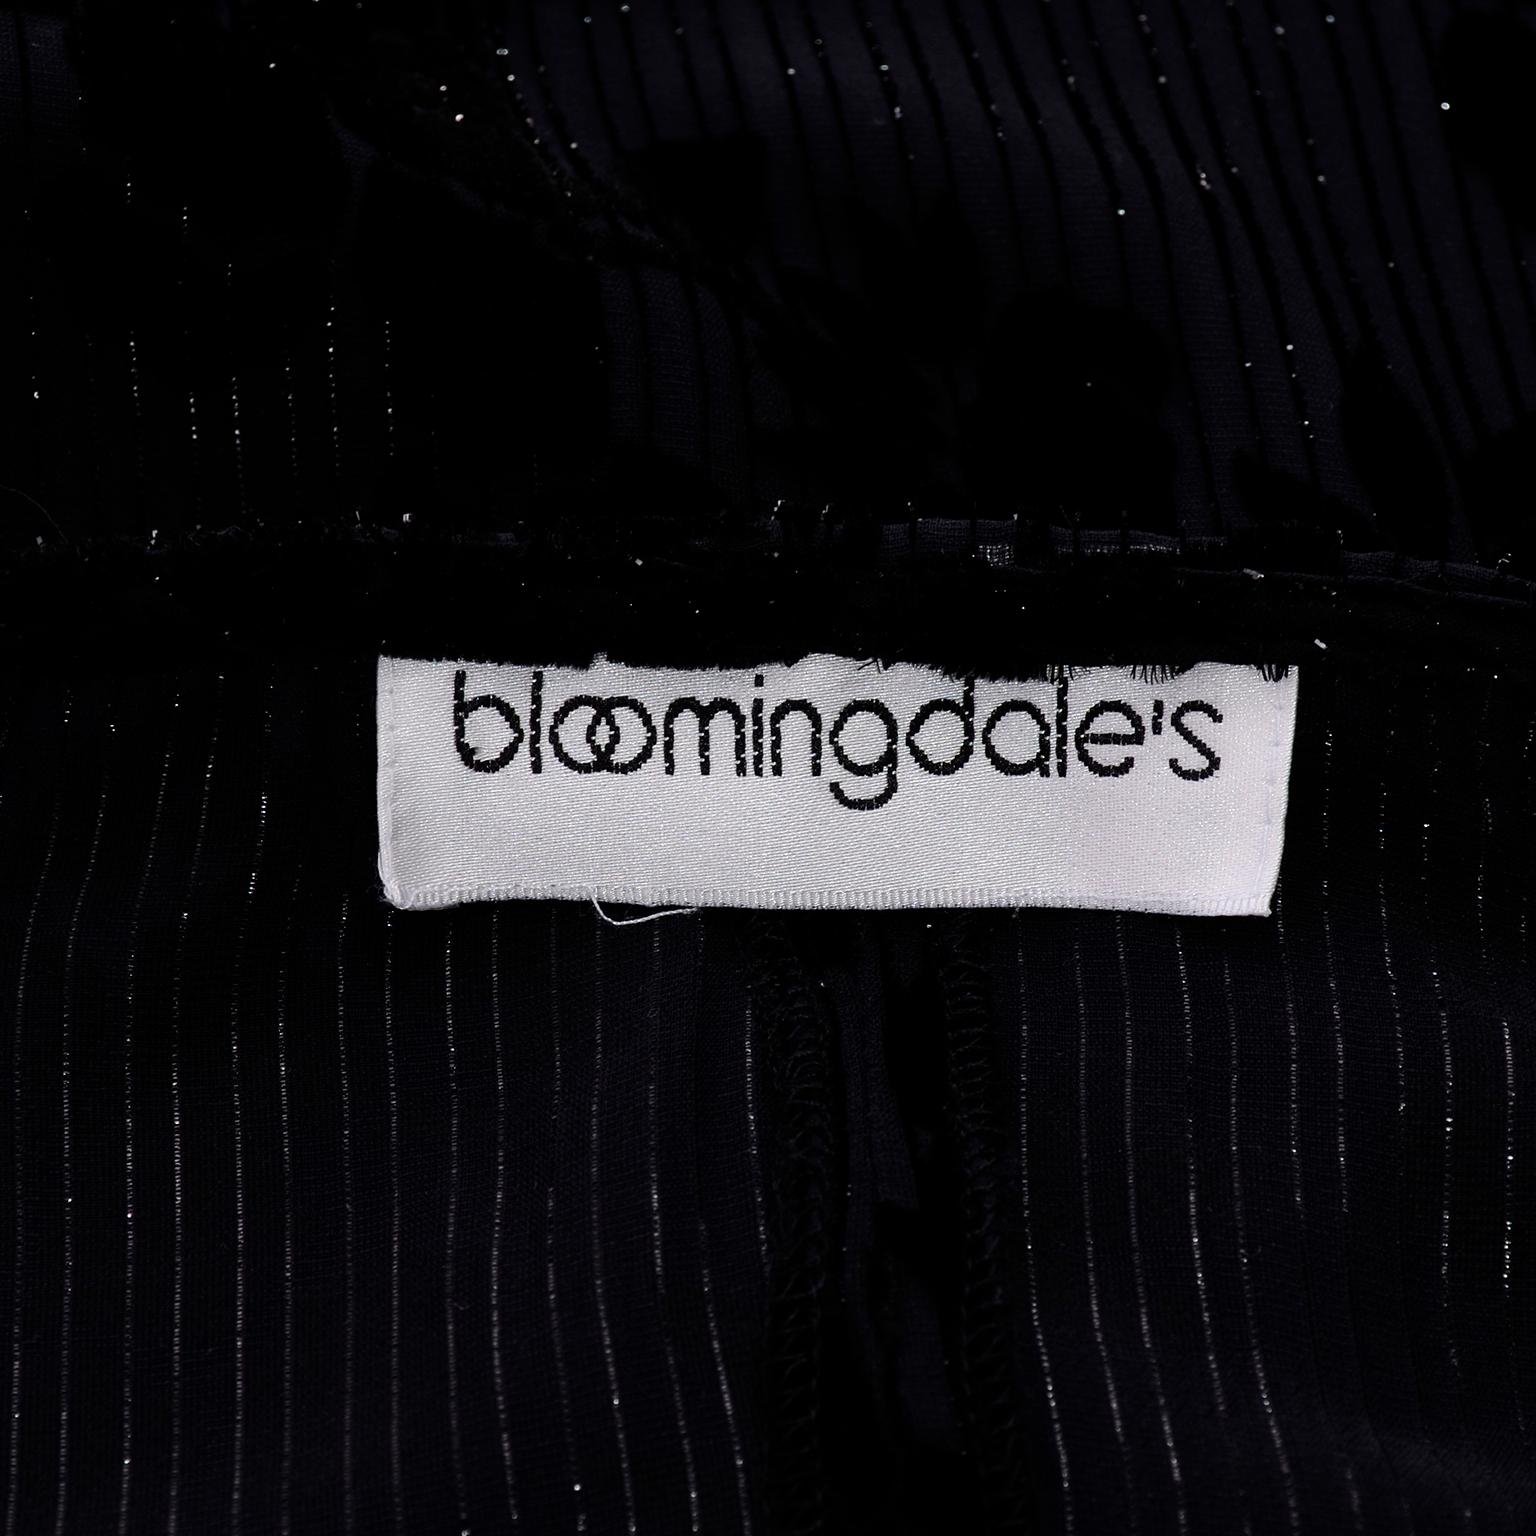 Bloomingdales Vintage 1980s Burn Out Black Velvet Dress With Metallic Threads For Sale 1